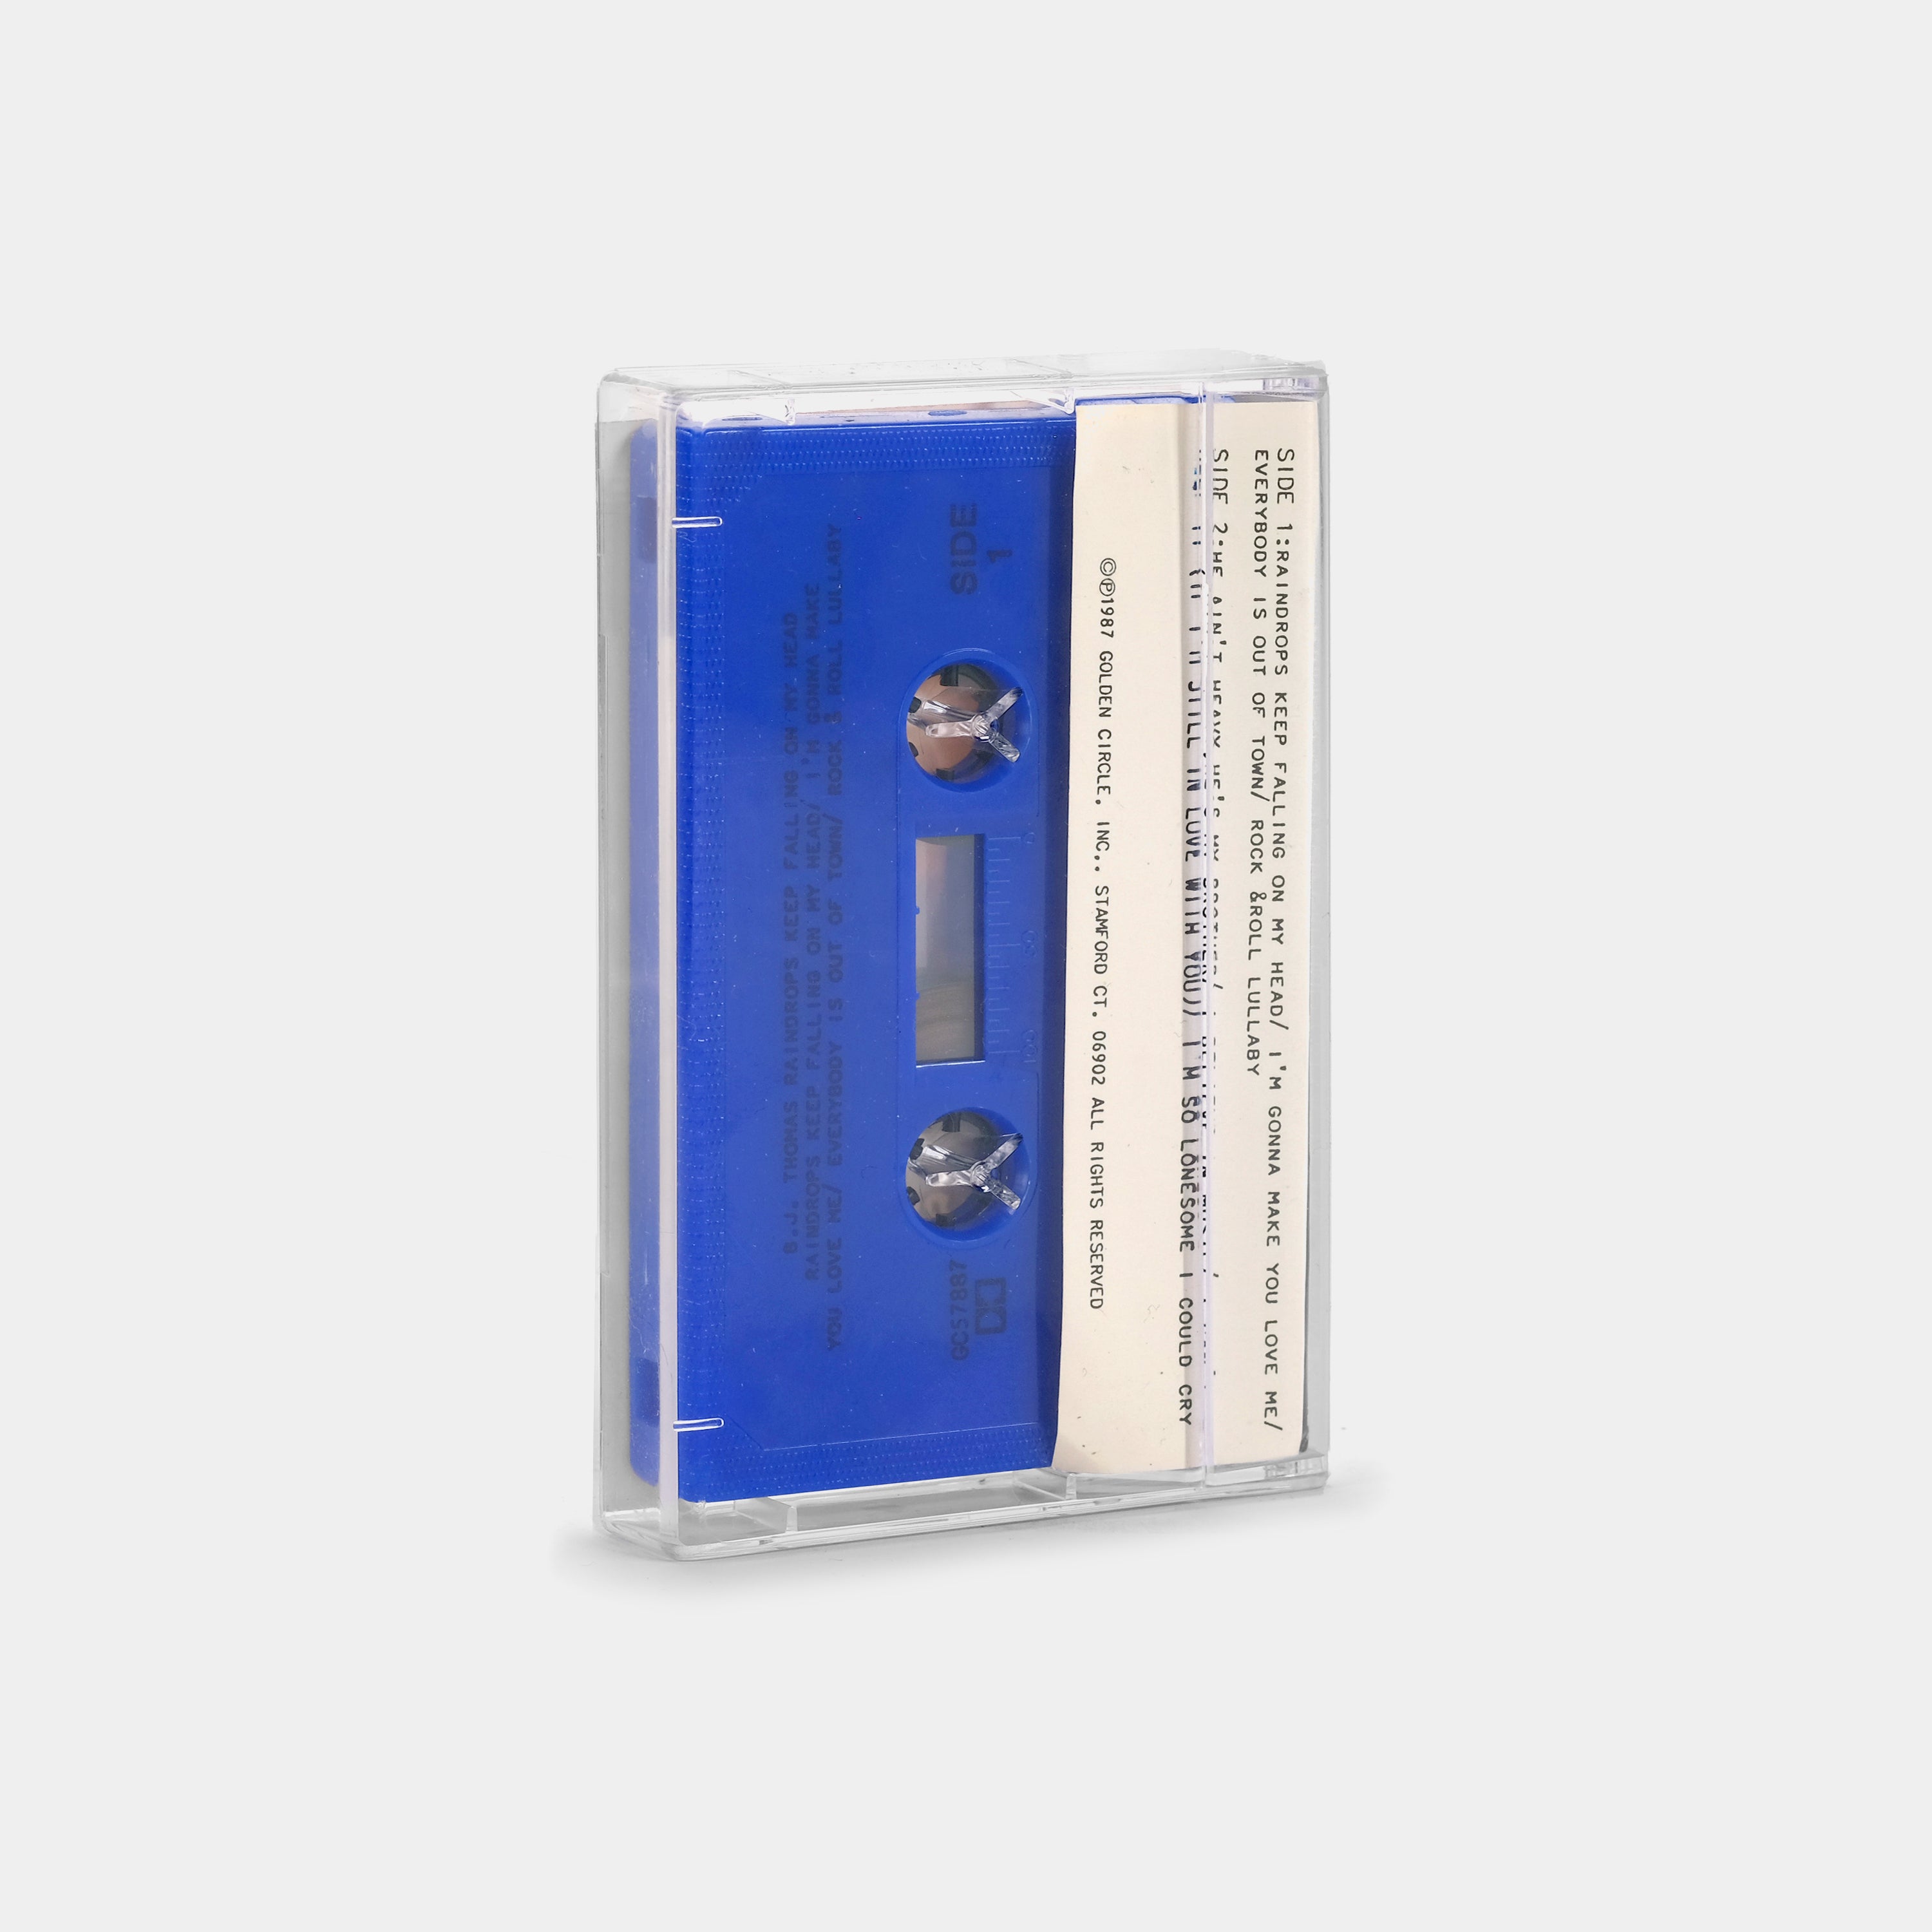 B.J. Thomas - Raindrops Keep Falling On My Head Cassette Tape